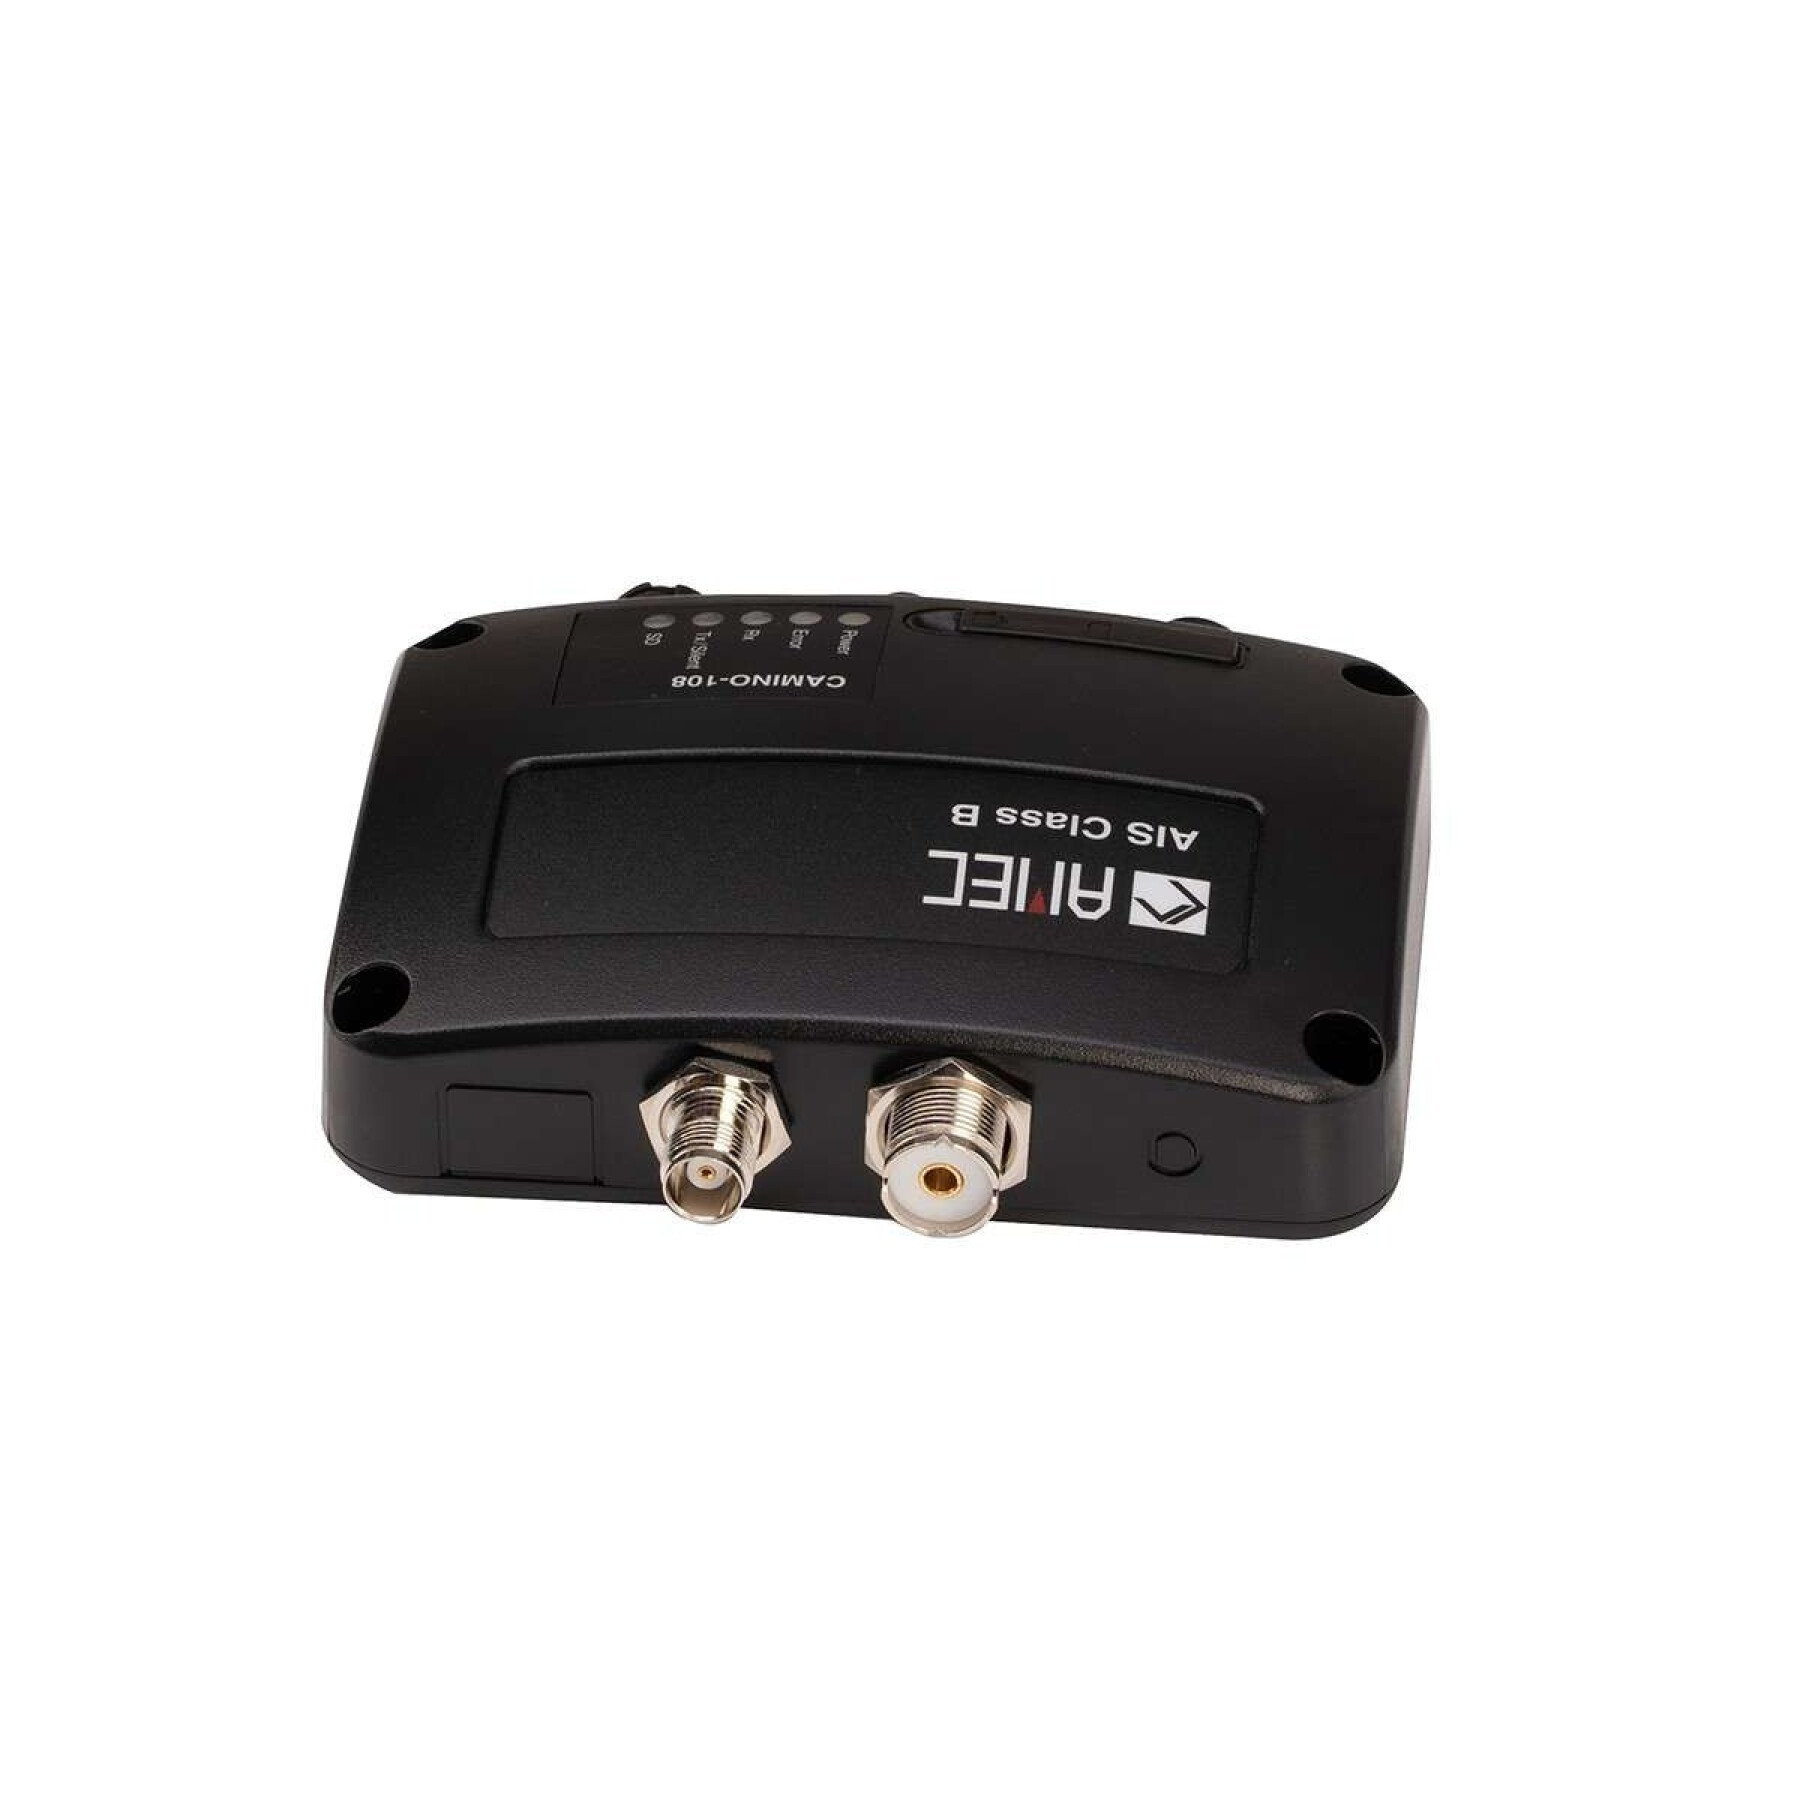 Transponder M.C Marine Camino-108 :AIS classe B USB-NMEA0183-N2K